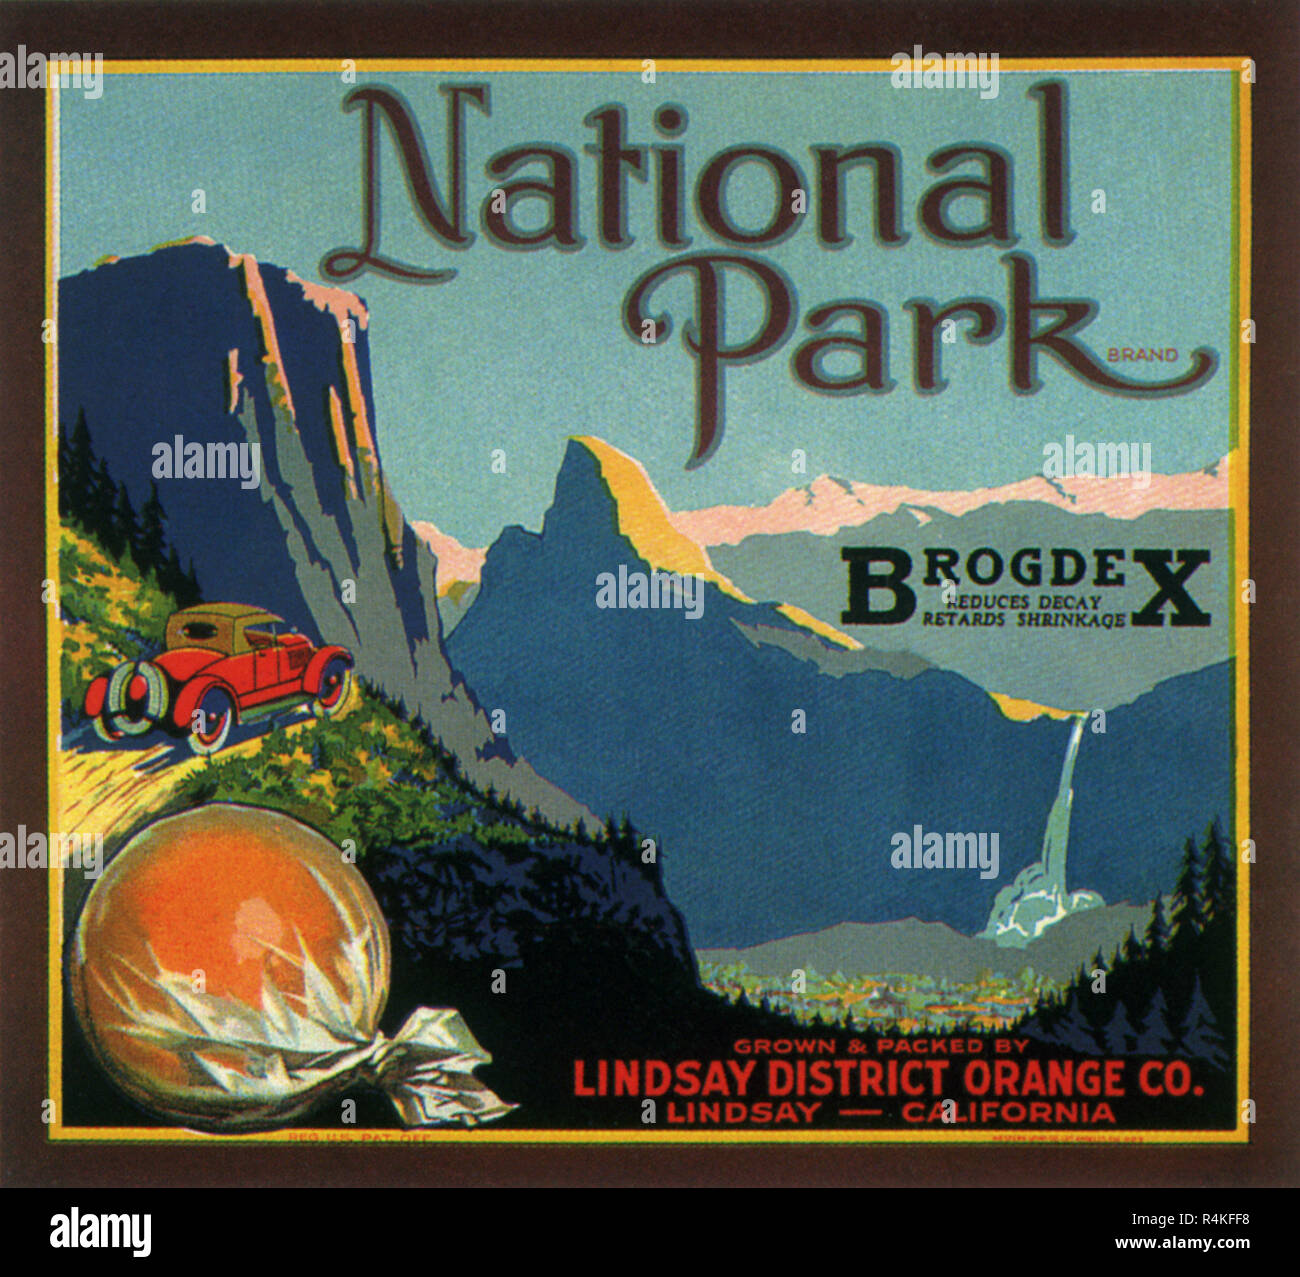 National Park and Orange. Stock Photo